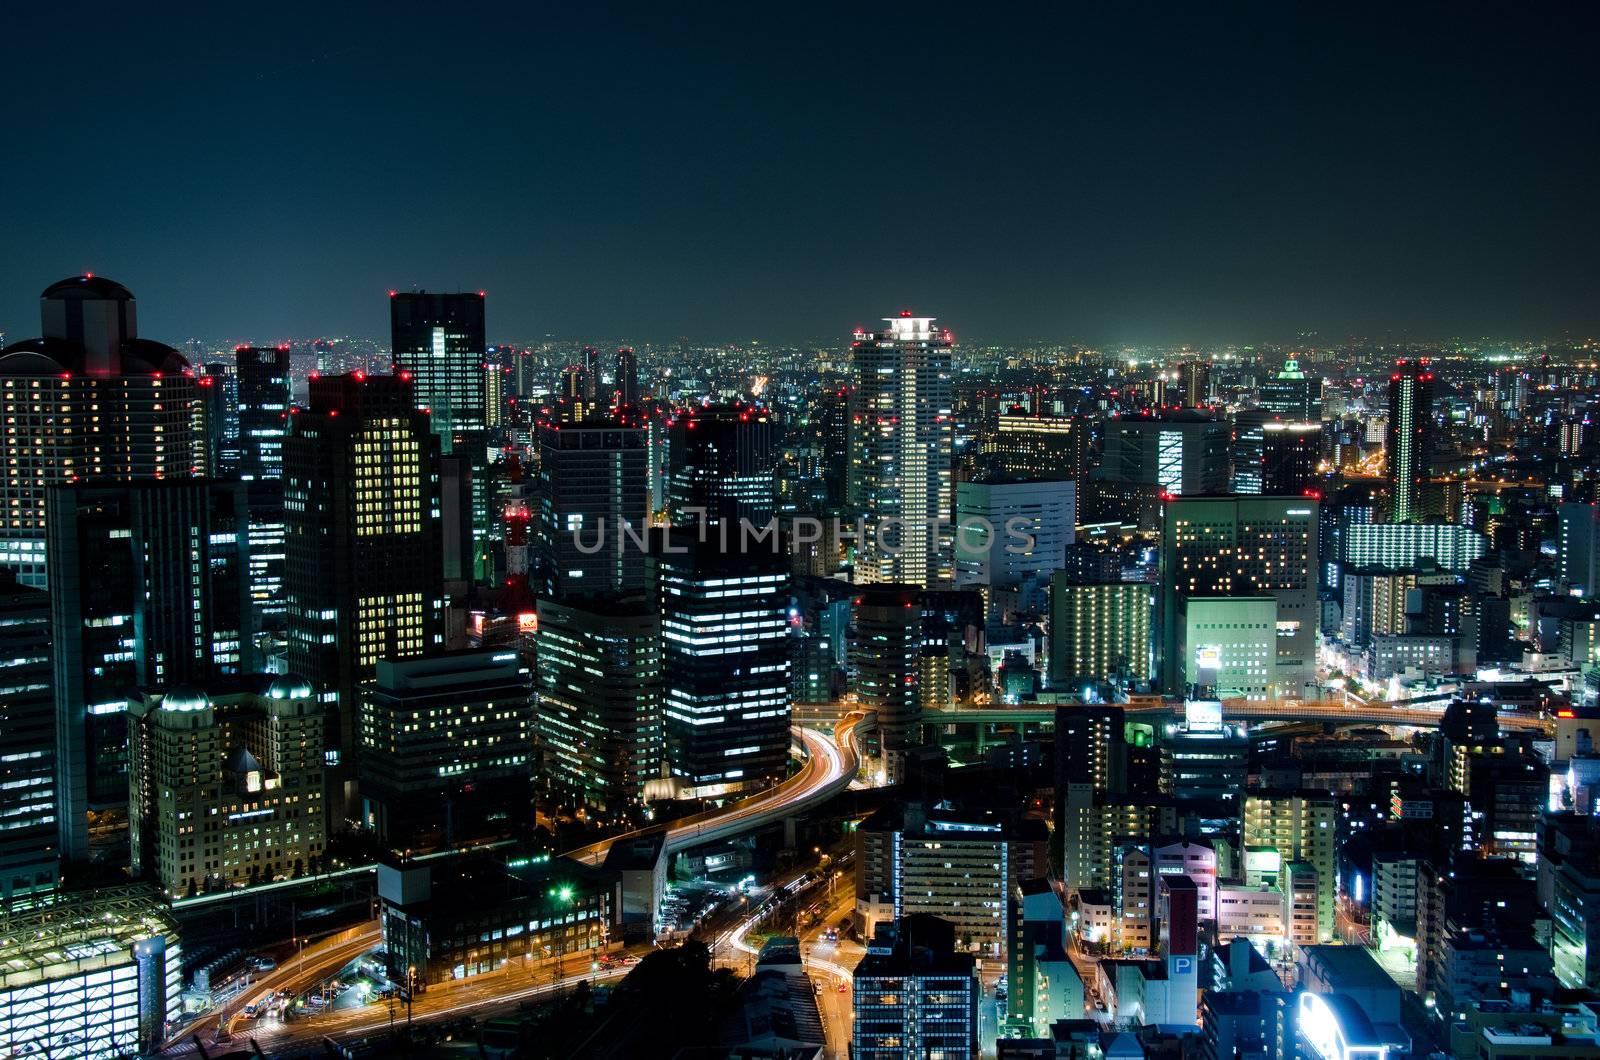 Osaka Skyline at night by Arrxxx